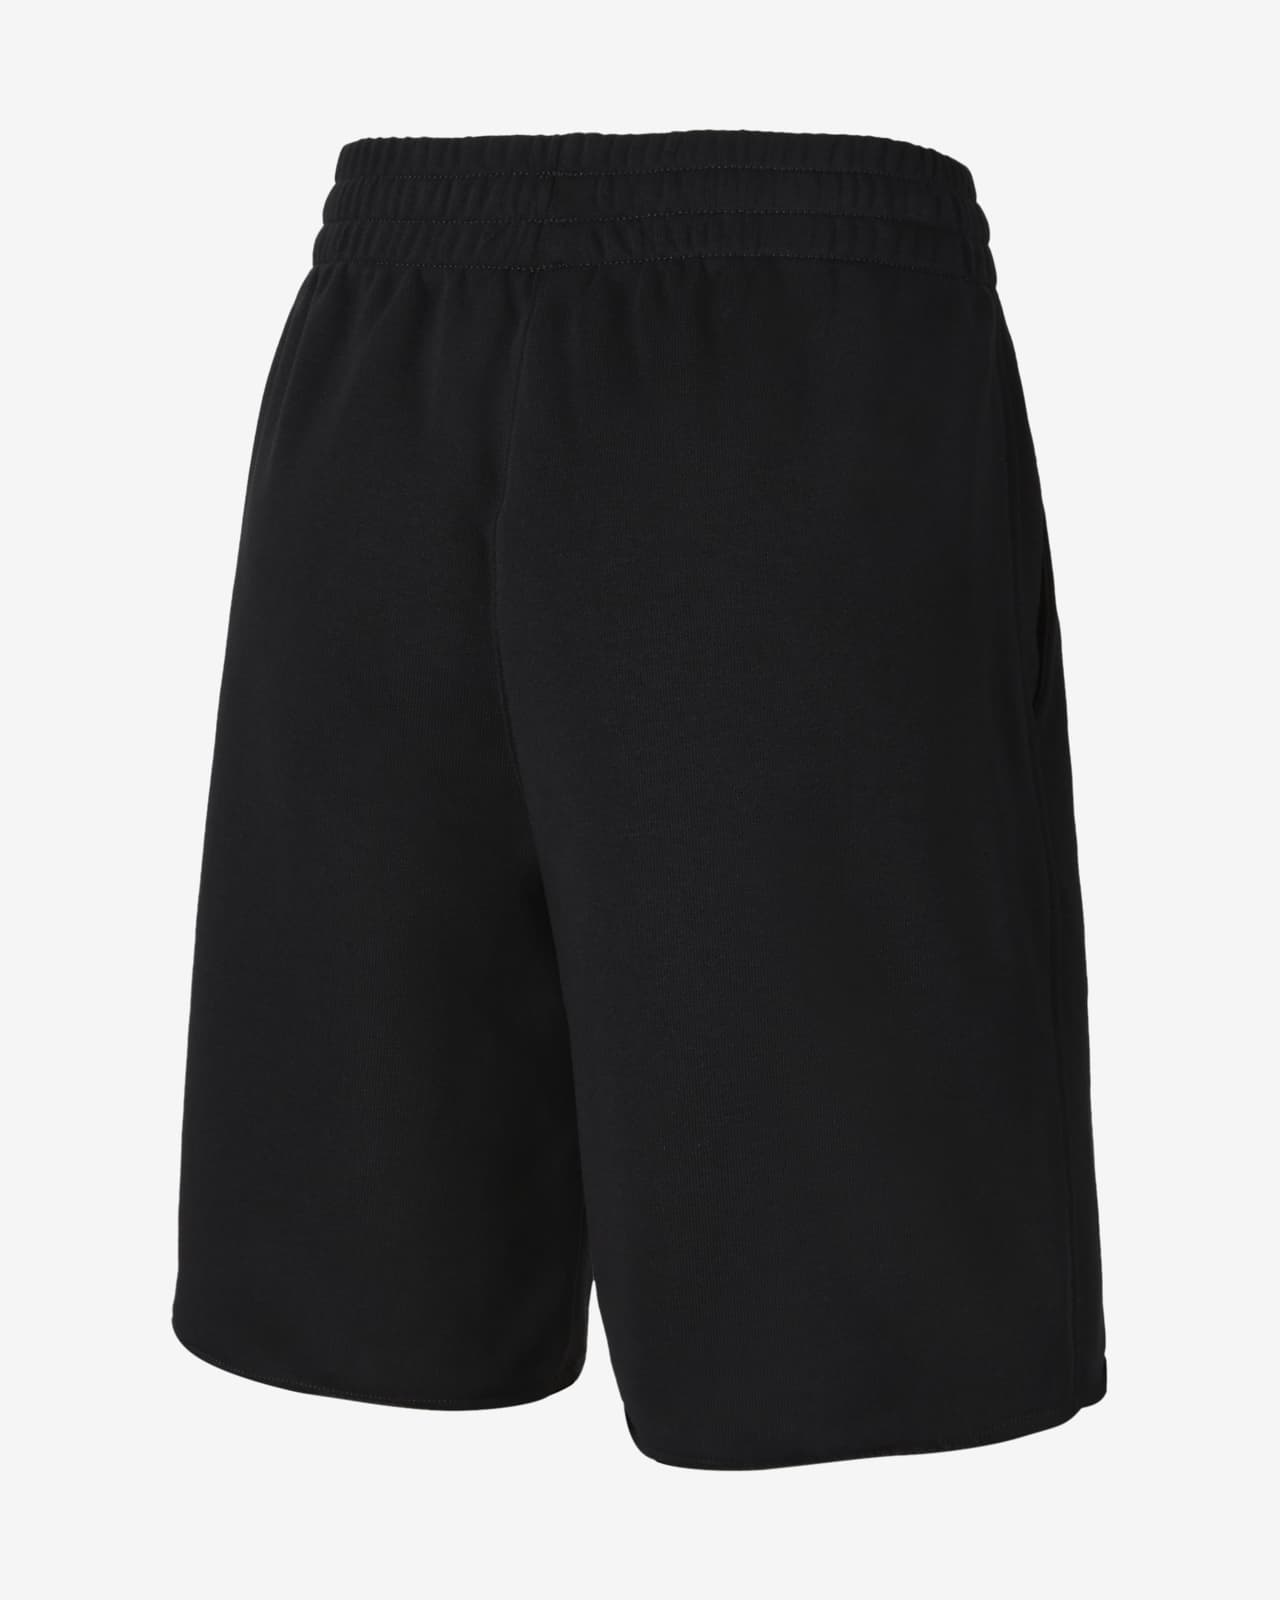 Women's Black Shorts. Nike LU